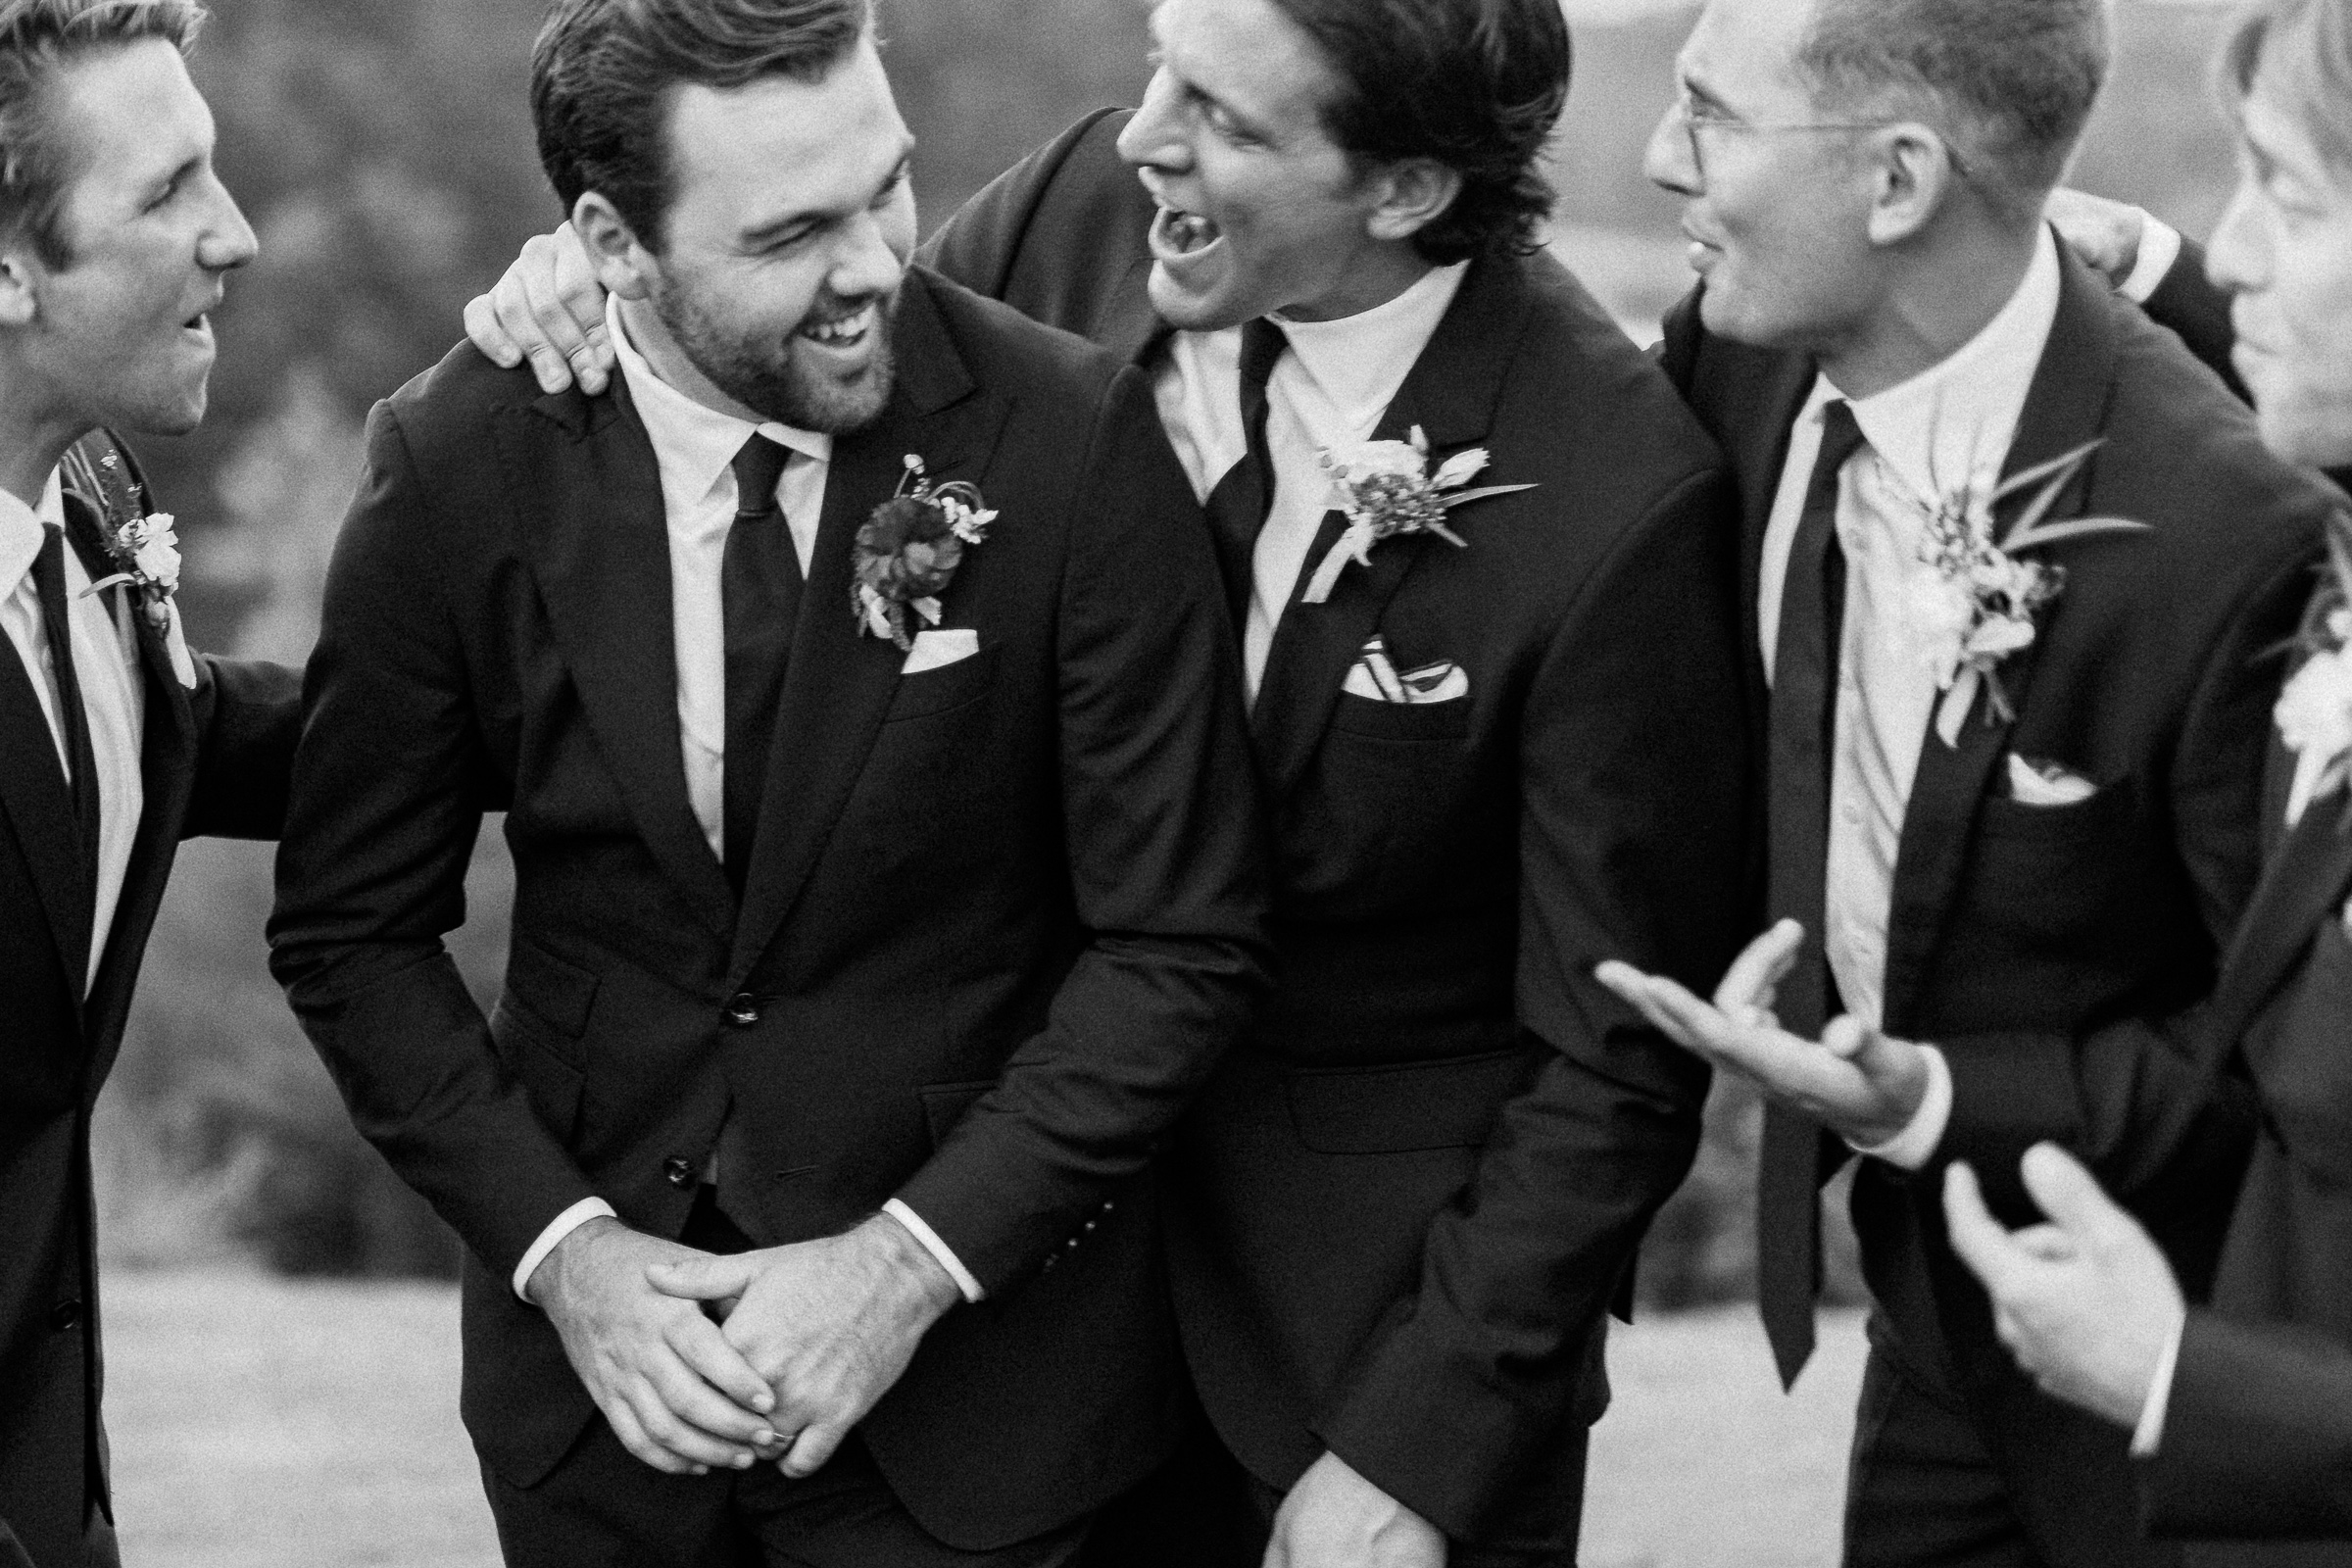 groom laughing with groomsman